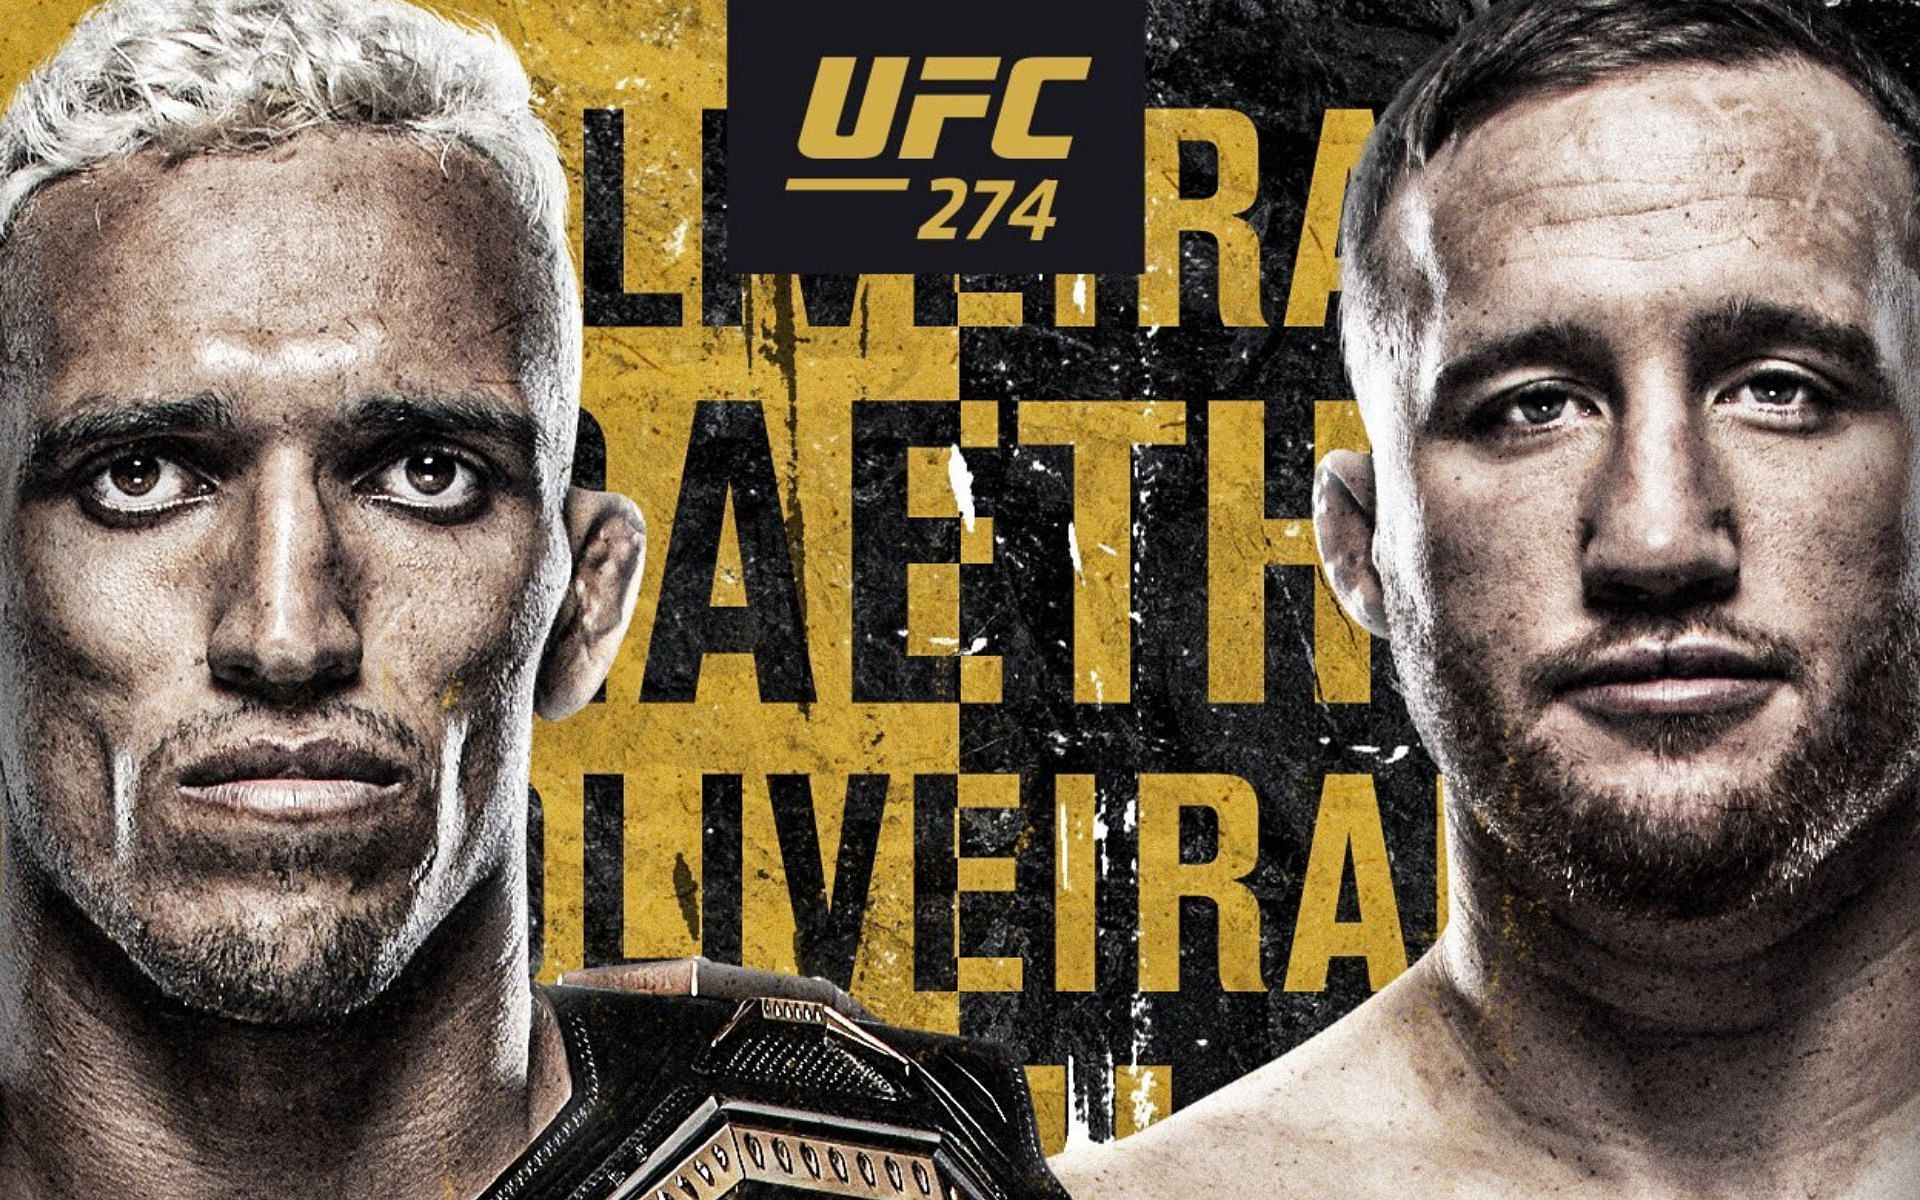 UFC 274: Oliveira vs. Gaethje poster [Image courtesy: @BestQualityGear via Twitter]